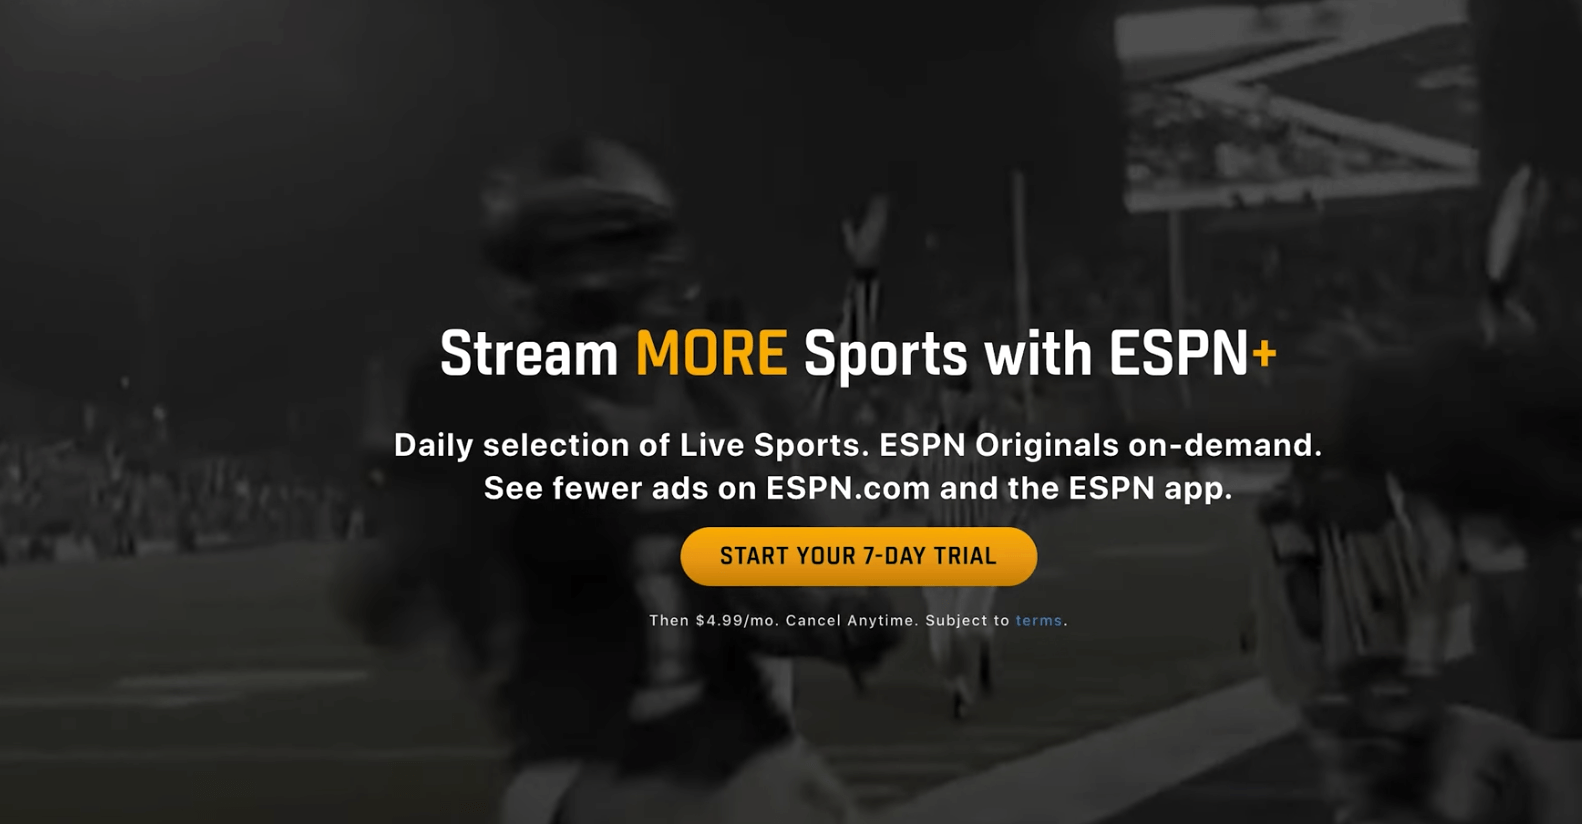 4K on ESPN Can I Watch 4K On ESPN+?